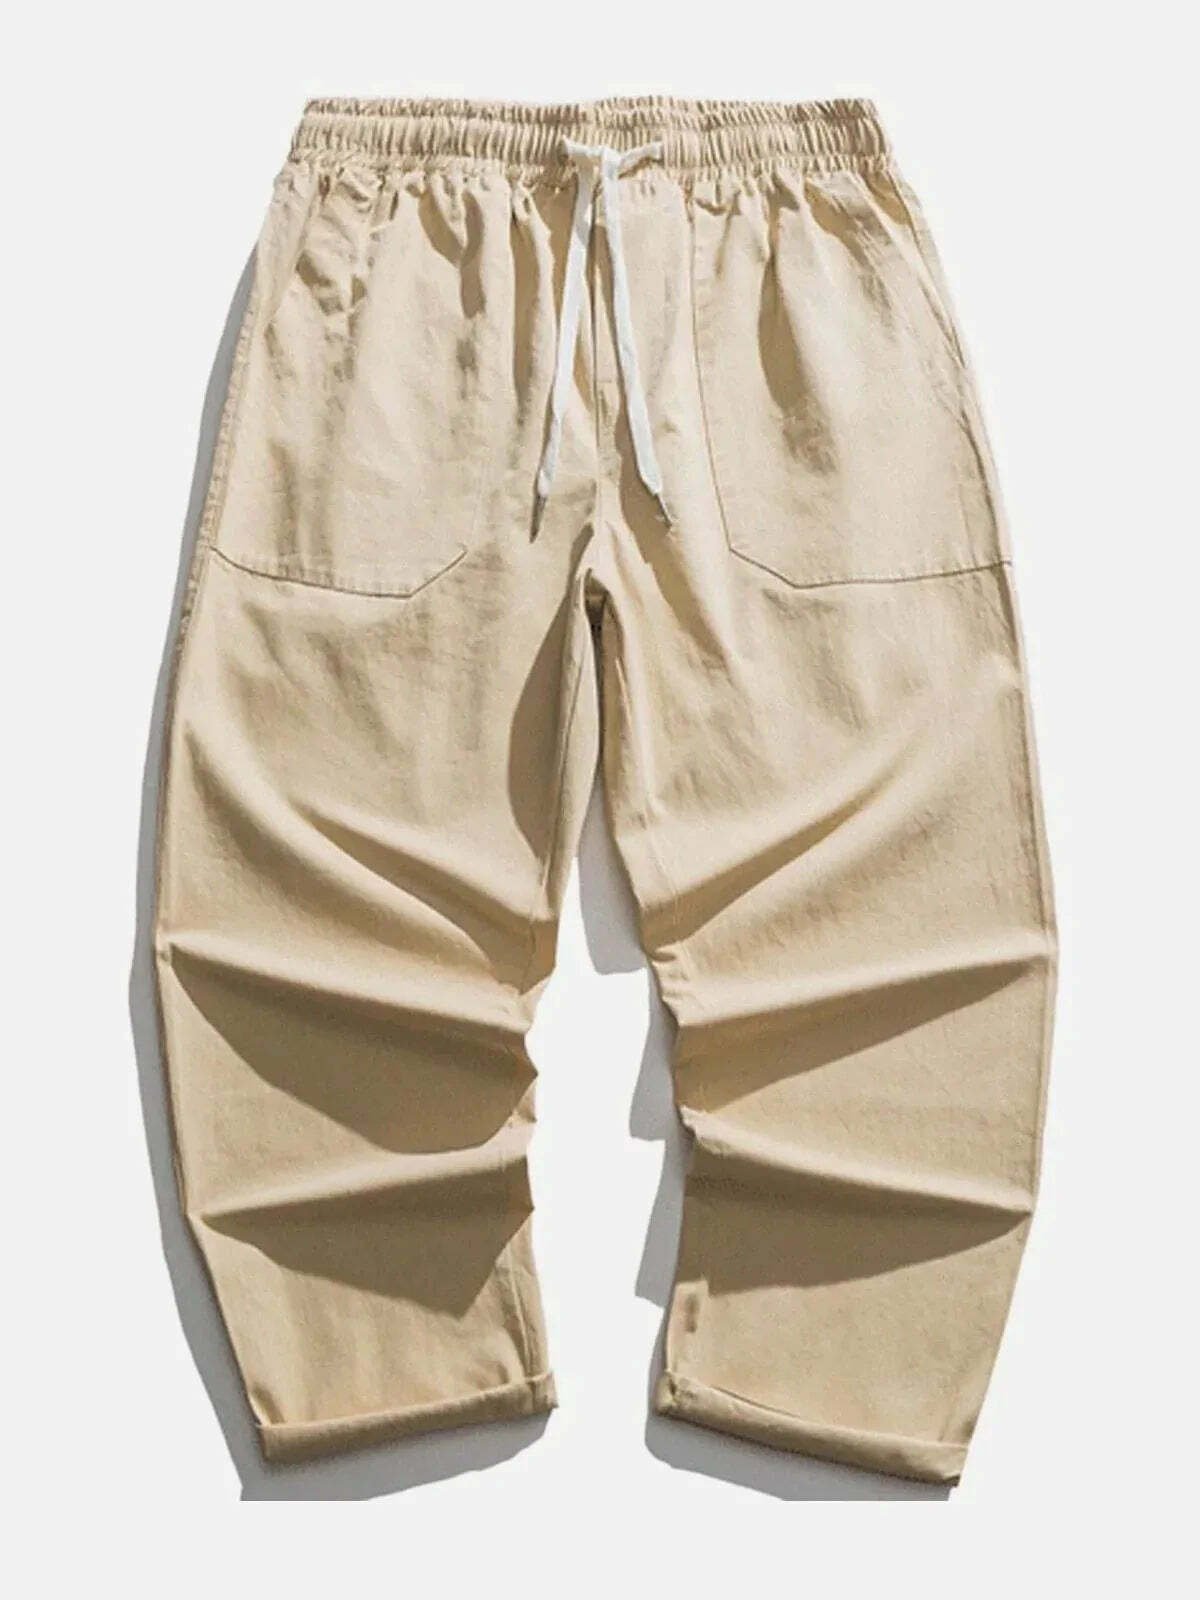 solid streetwear pants edgy & innovative urban style 5319